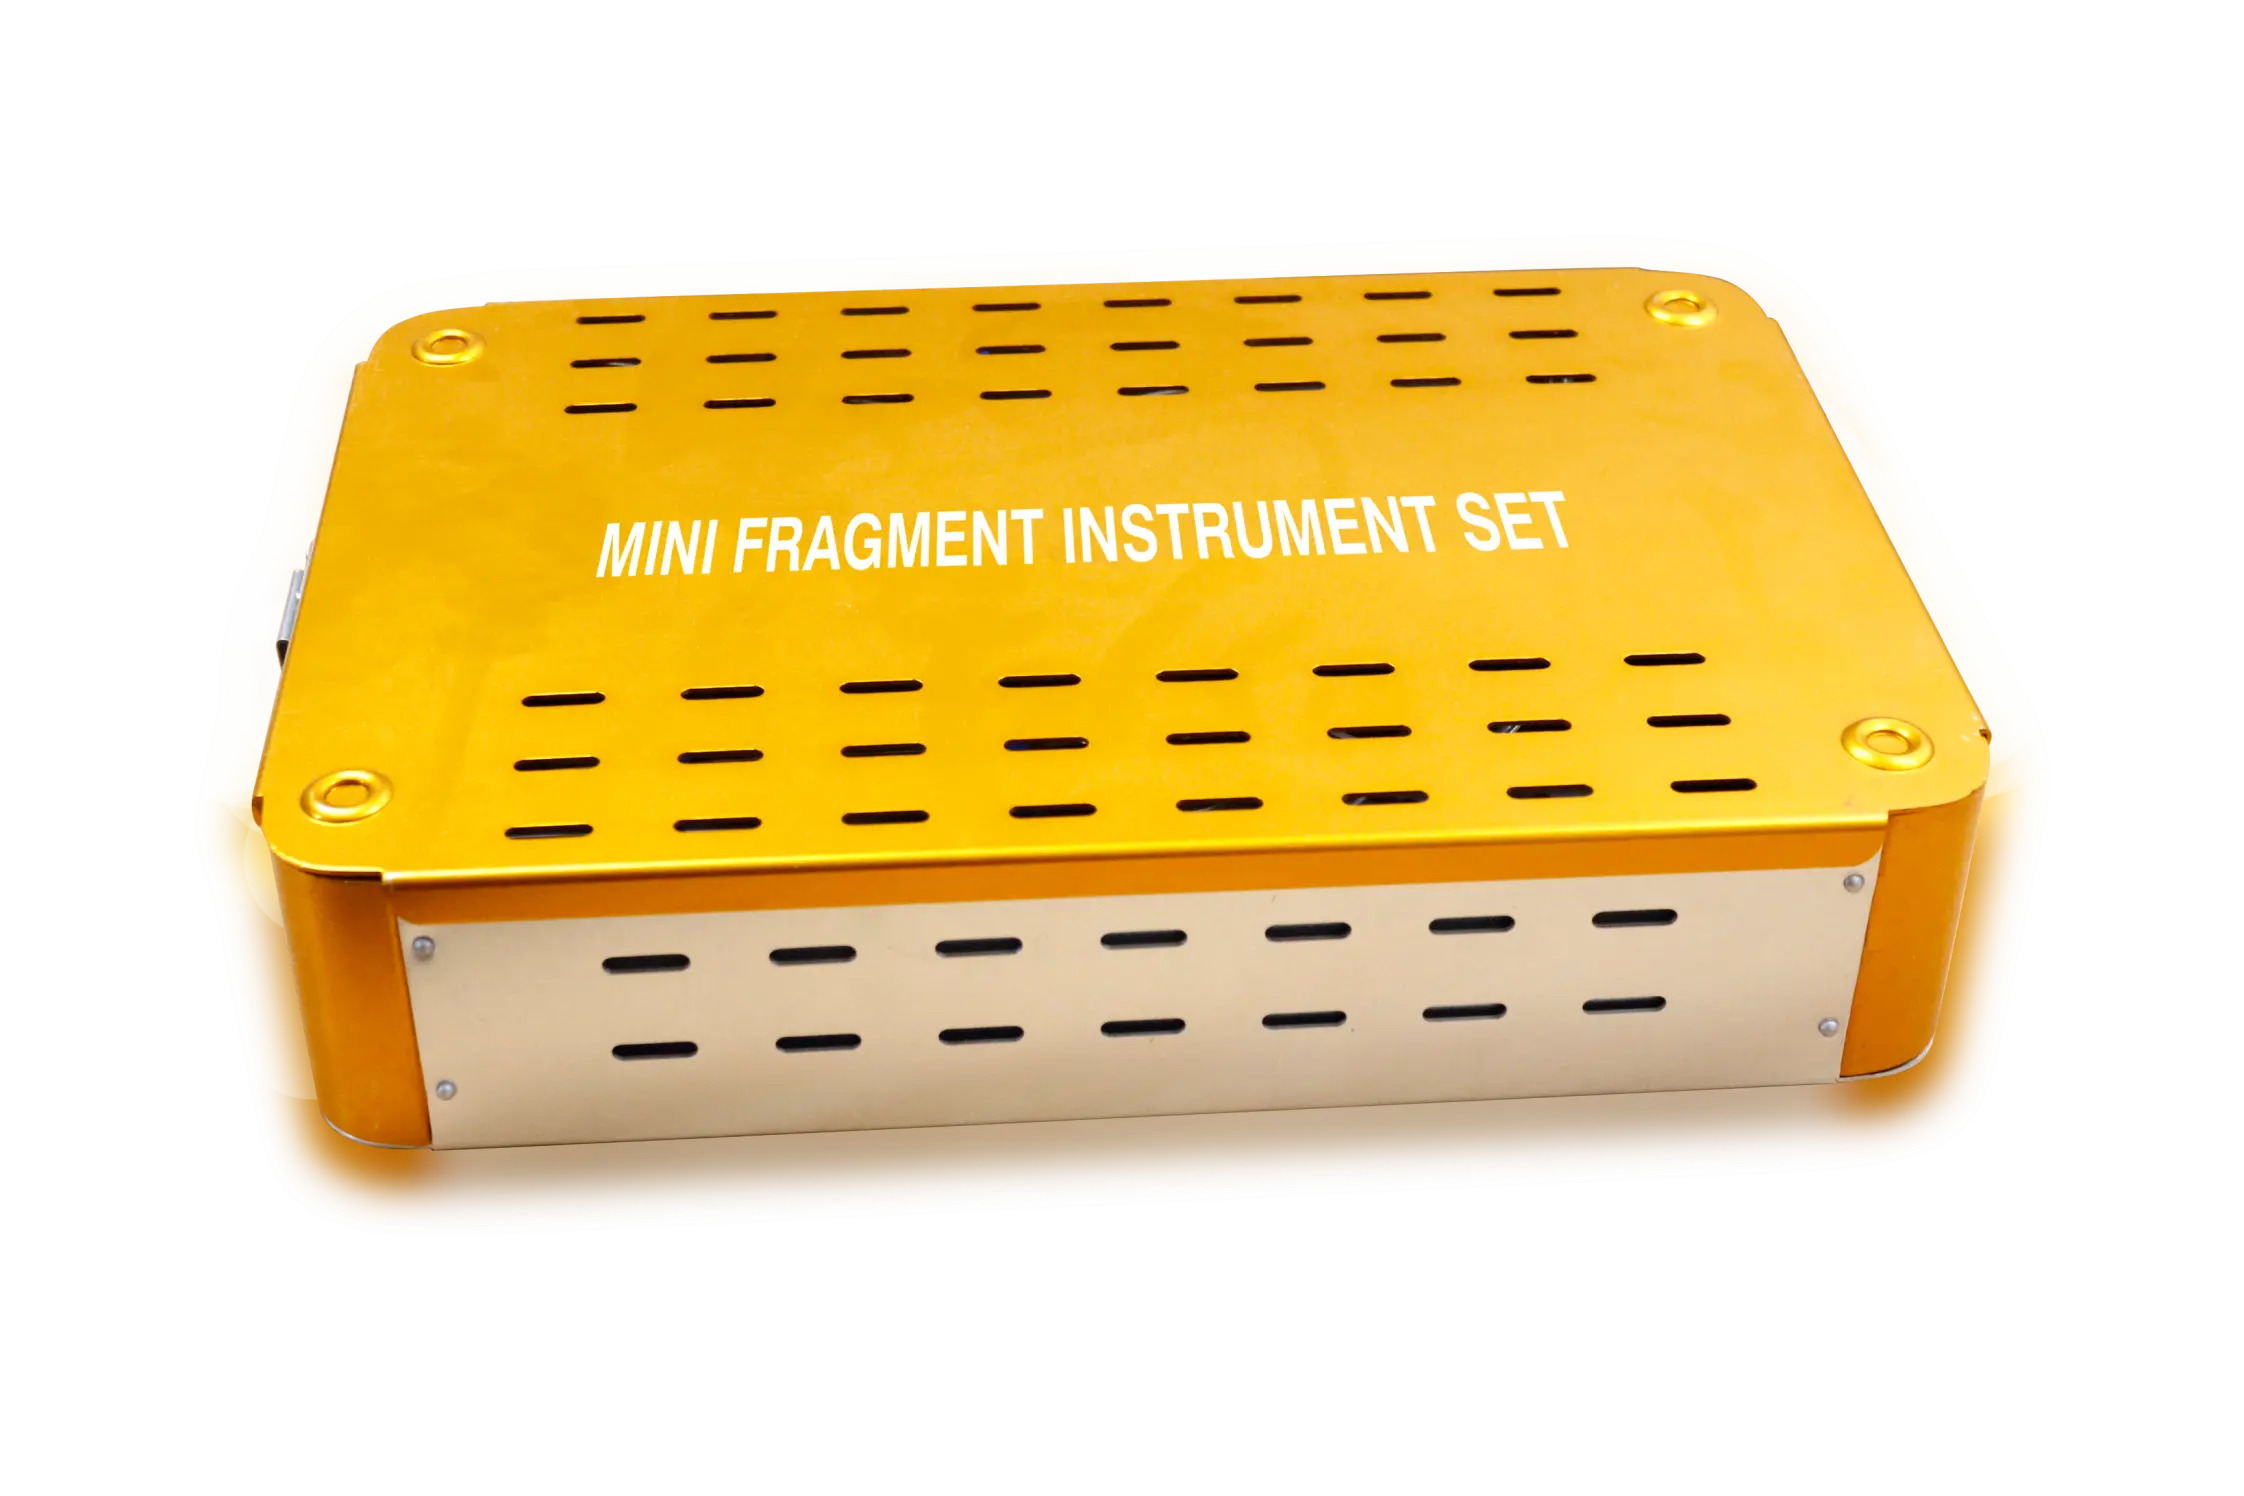 Instrument Set Container